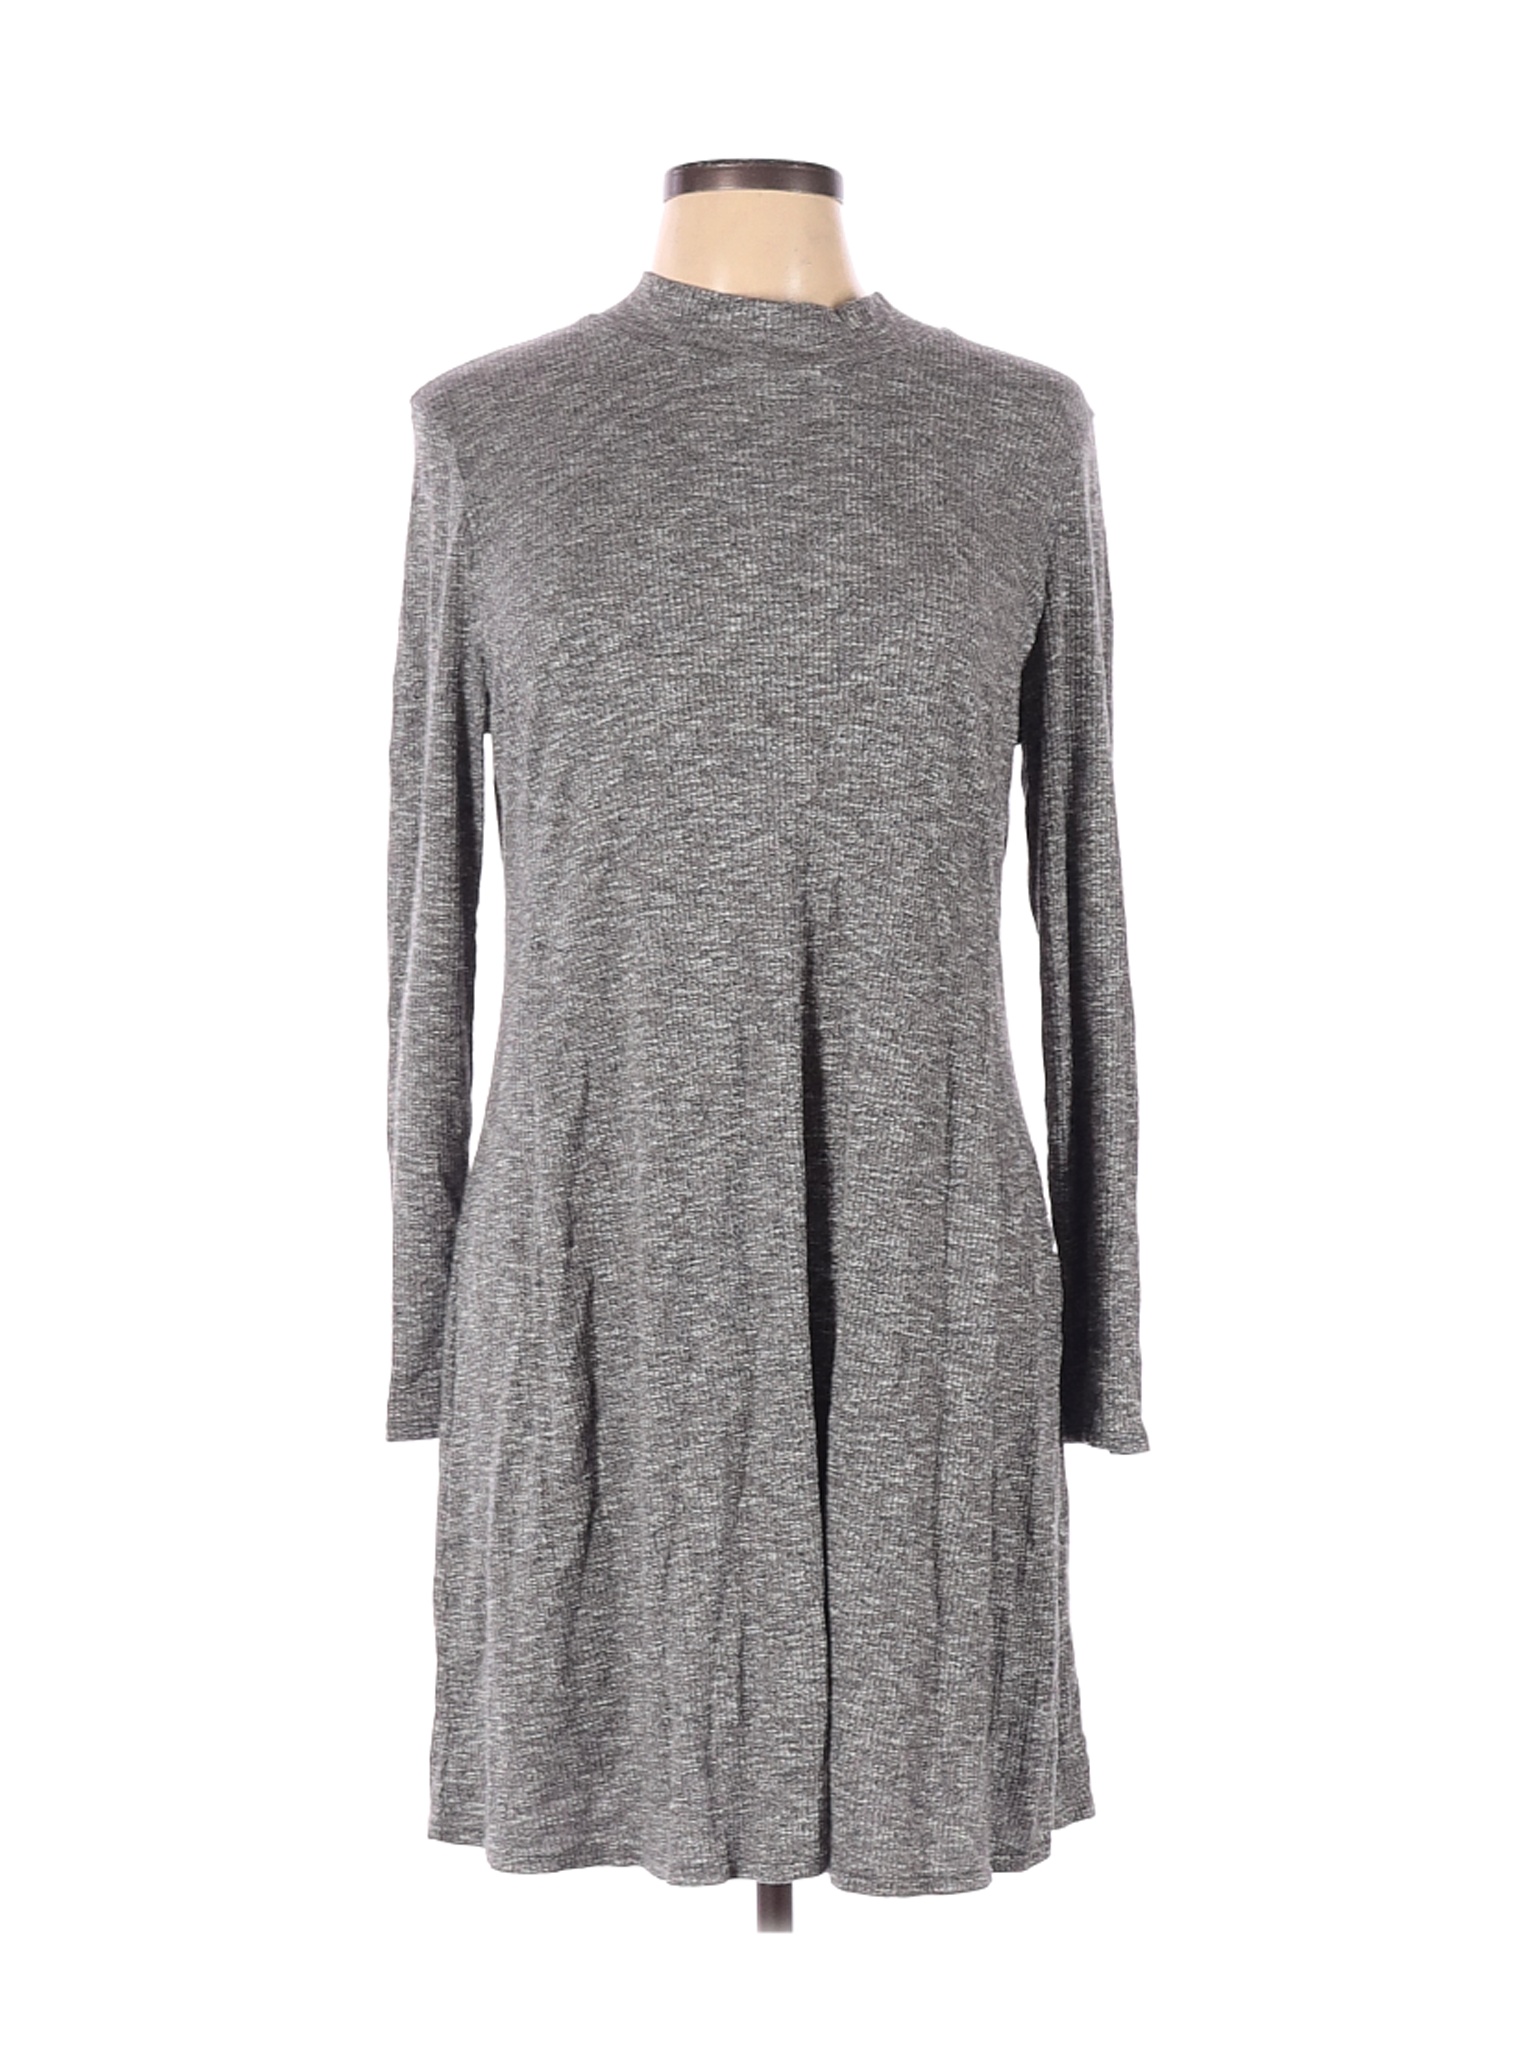 Madewell Women Gray Casual Dress L | eBay